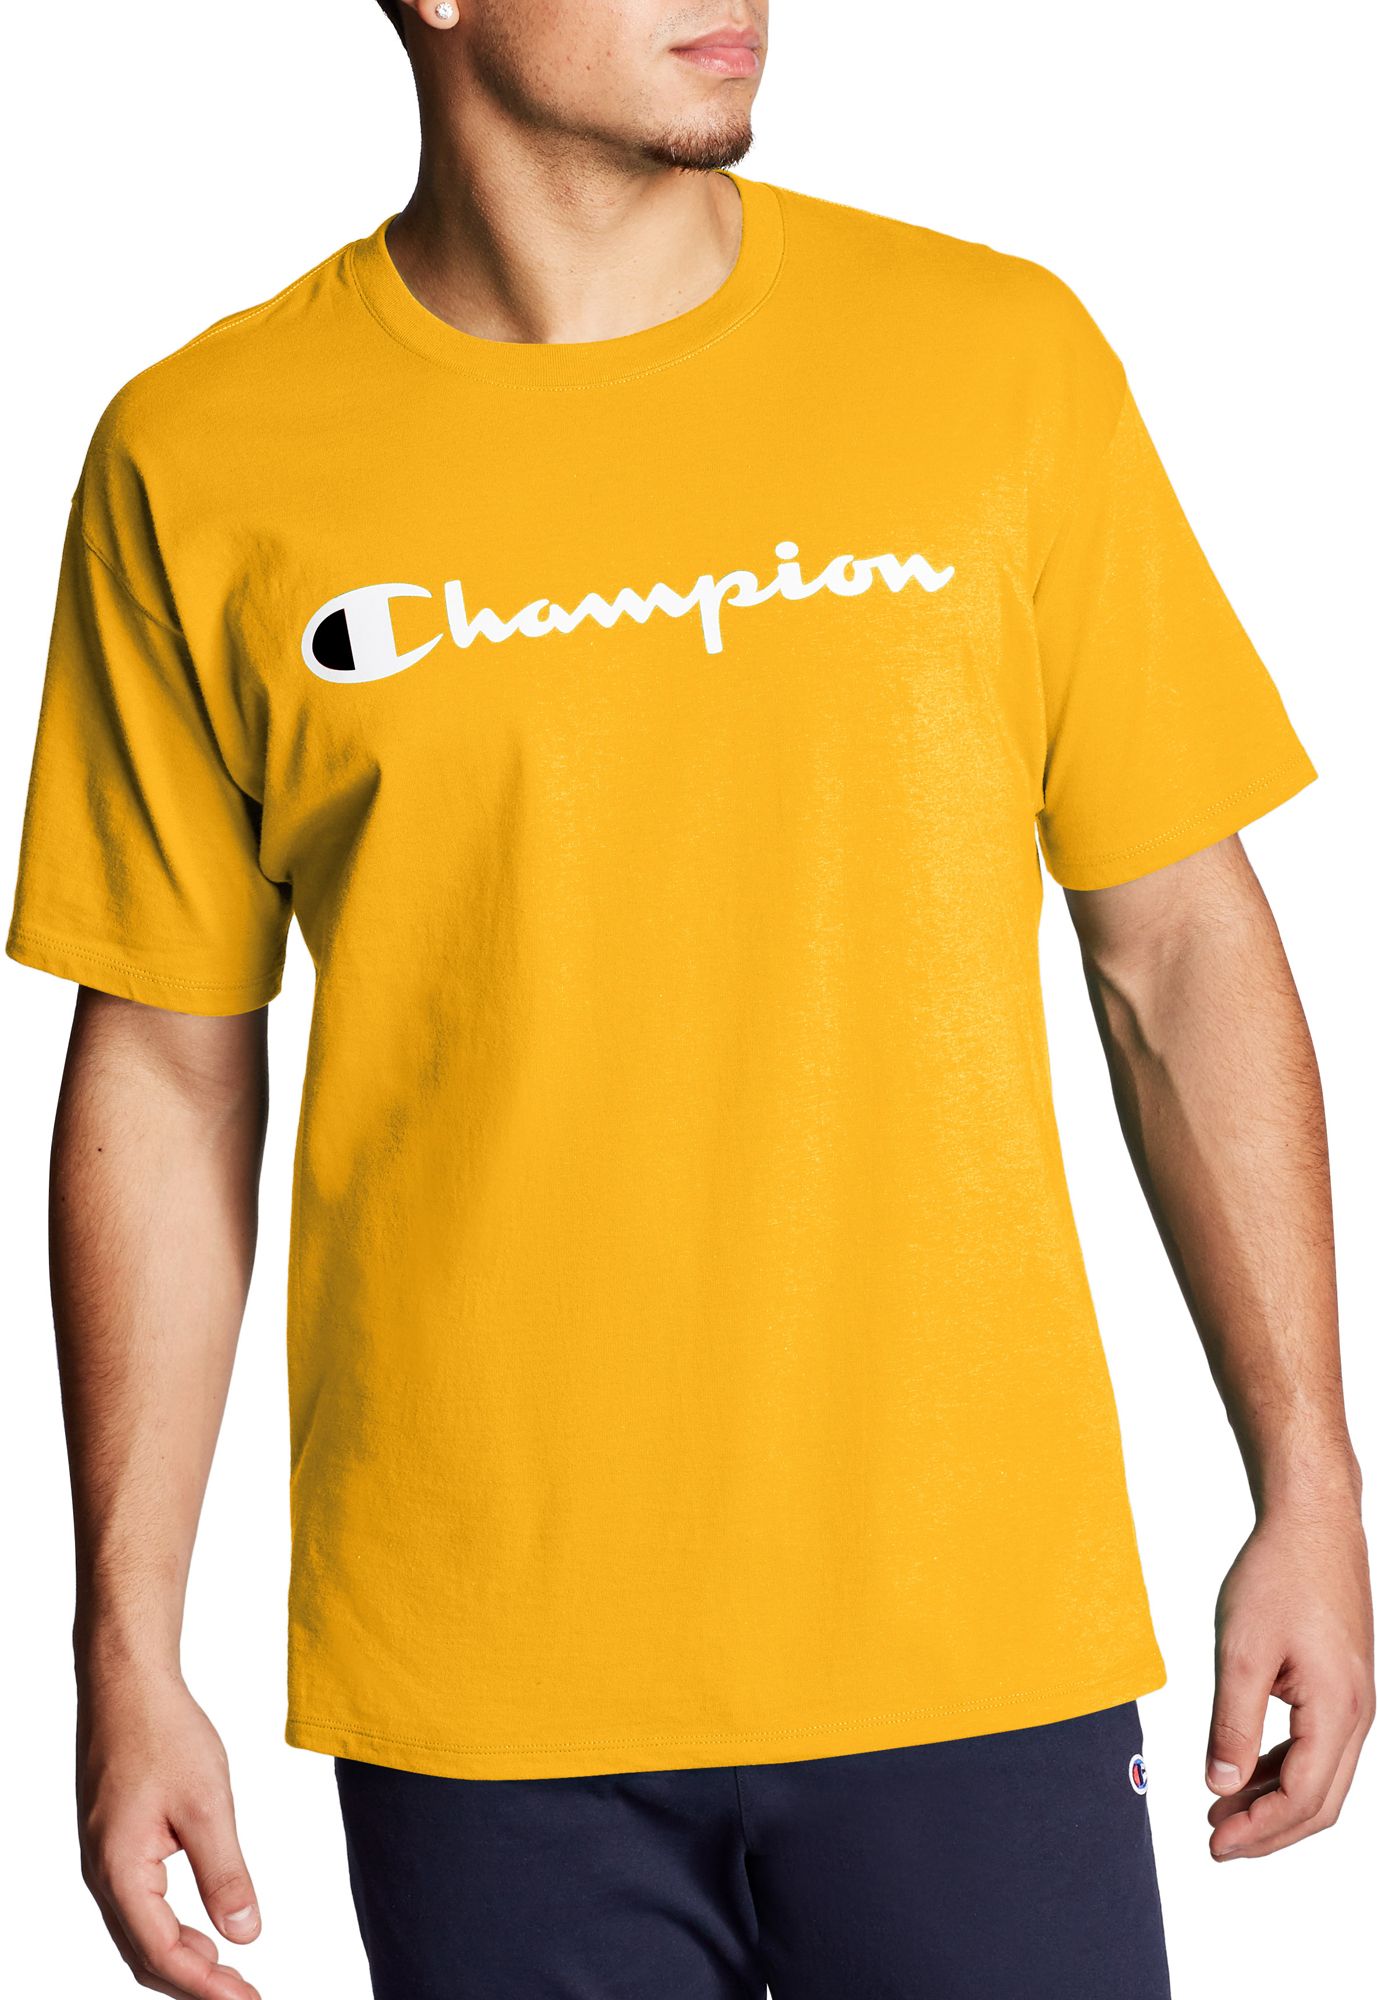 champion crop top yellow